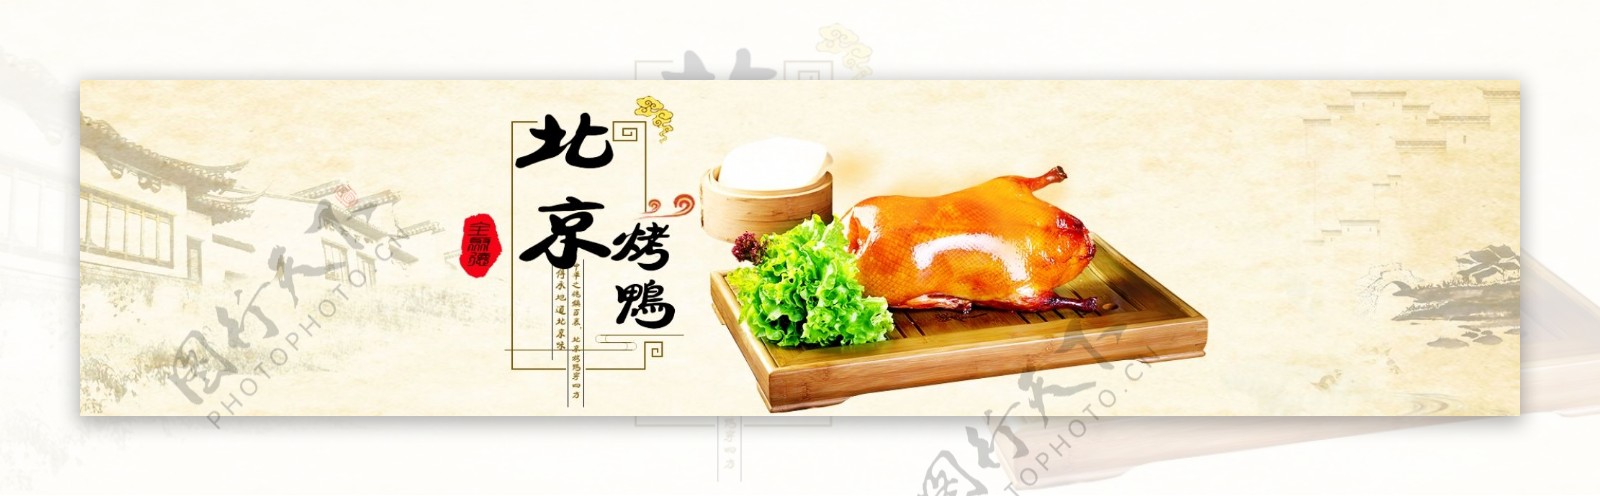 北京烤鸭banner